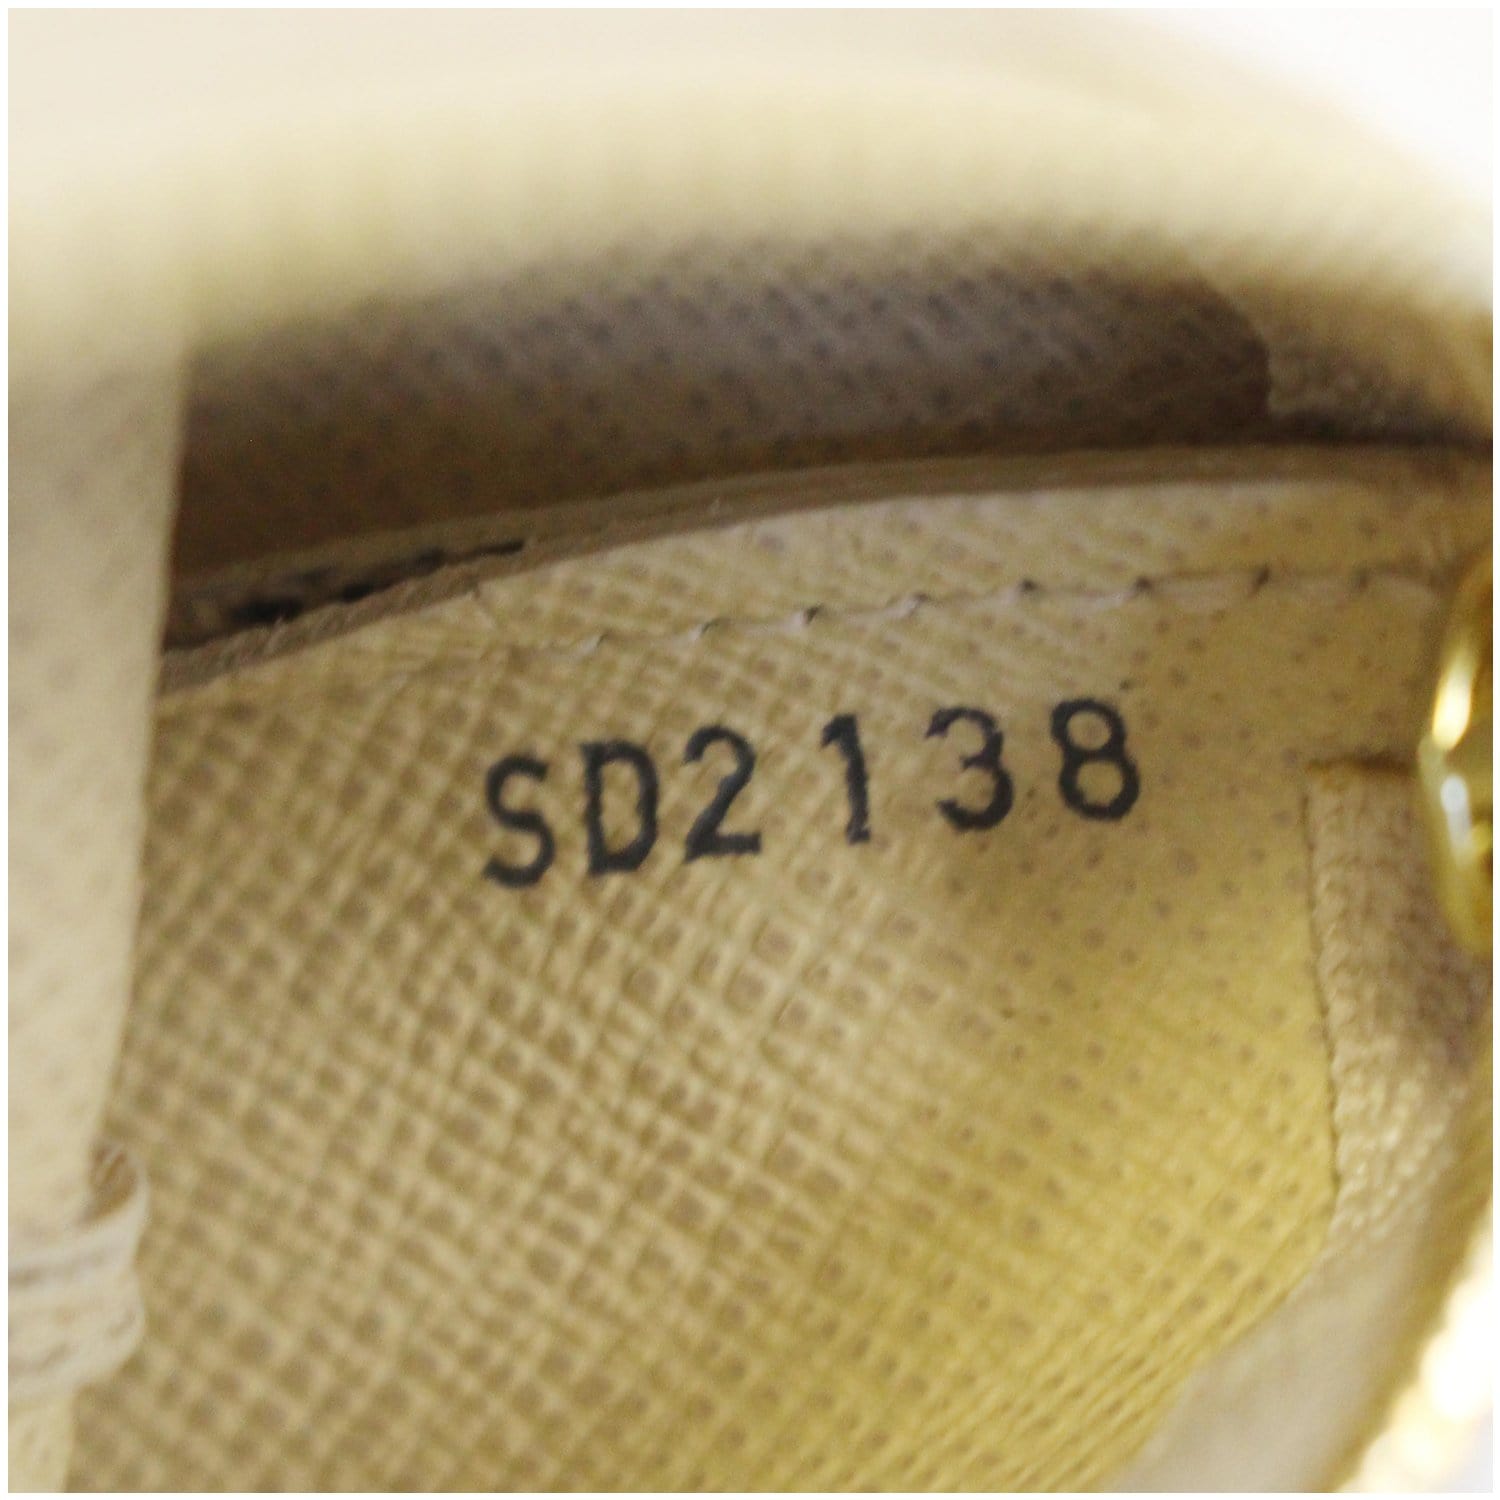 Louis Vuitton Coin case Mini Purse Damier Azur White Key Chain Leather #462D